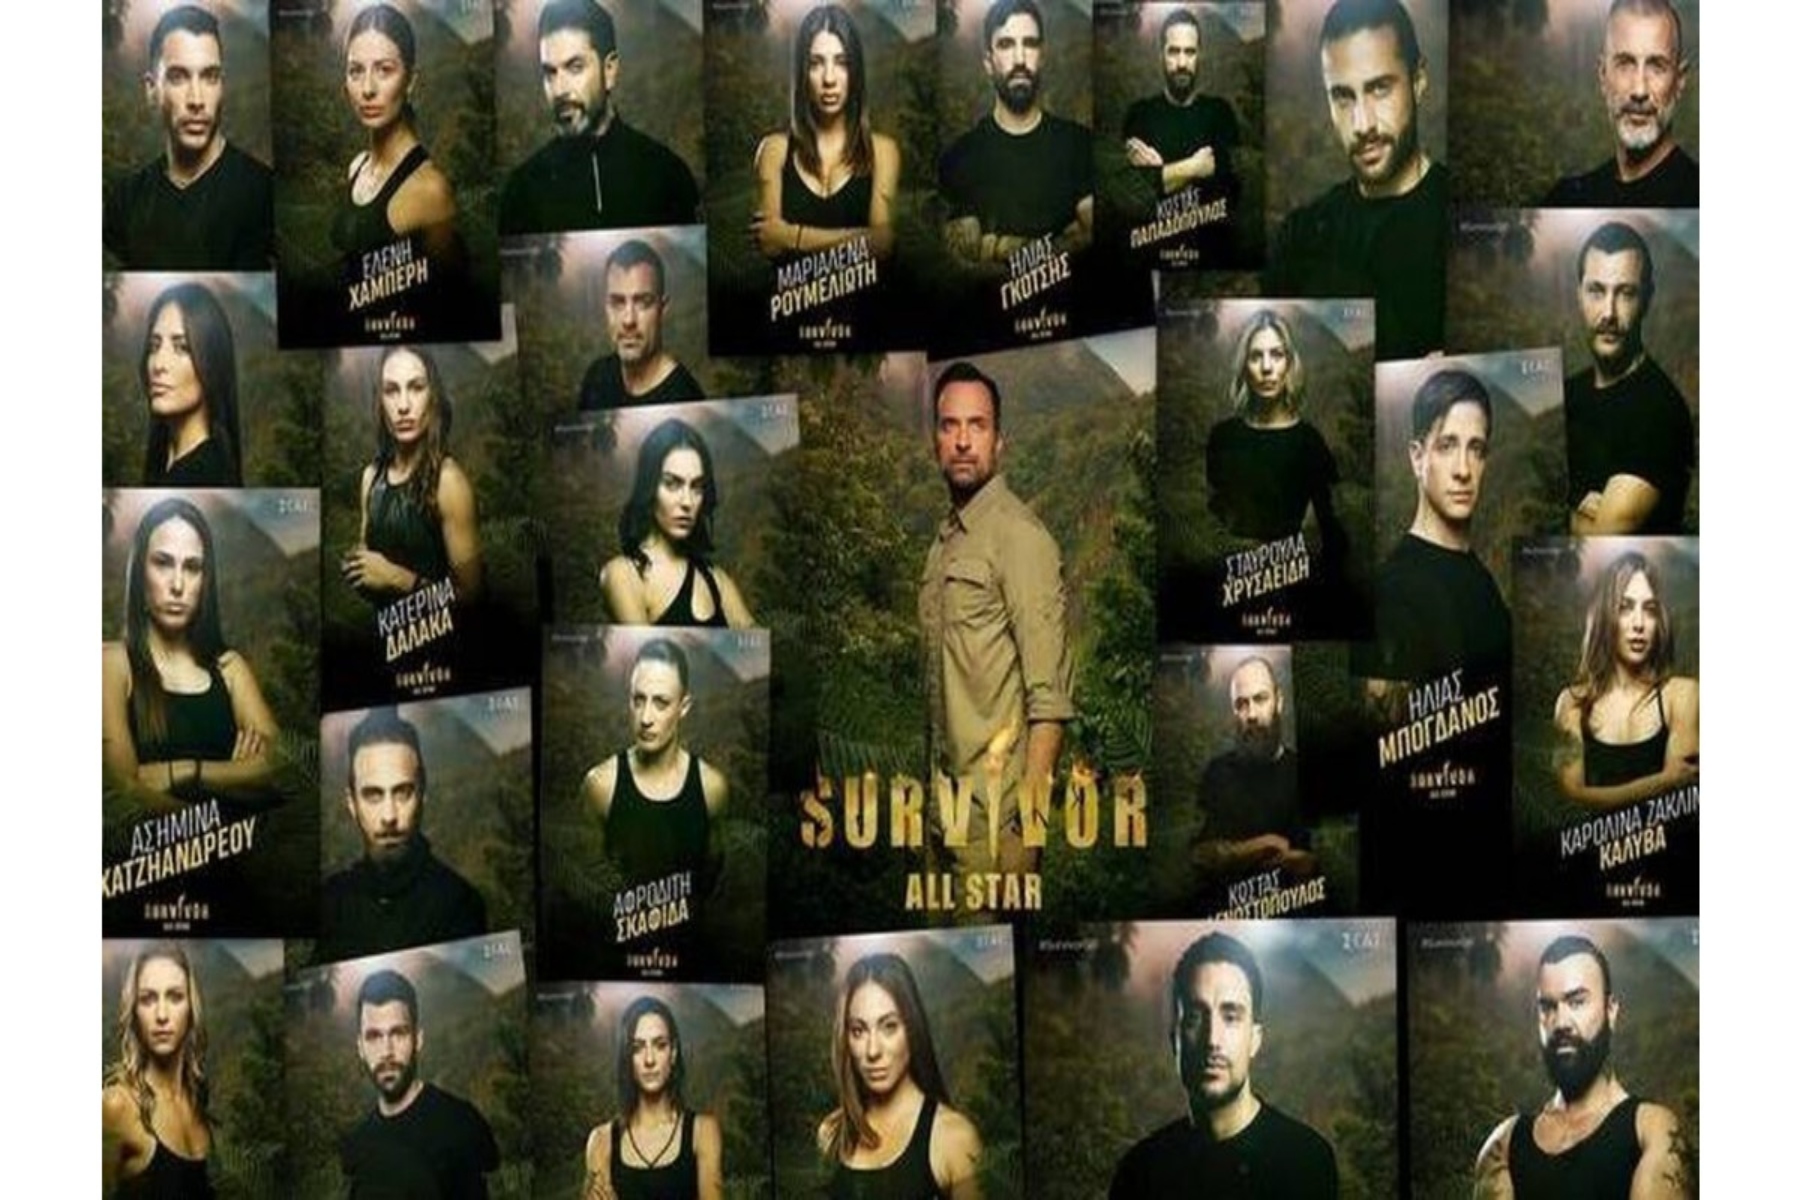 Survivor All Star 1/6: O Tάκης για άλλη μια φορά εκνευρίζει του συμπαίκτες και αντιπάλους του [trailer]